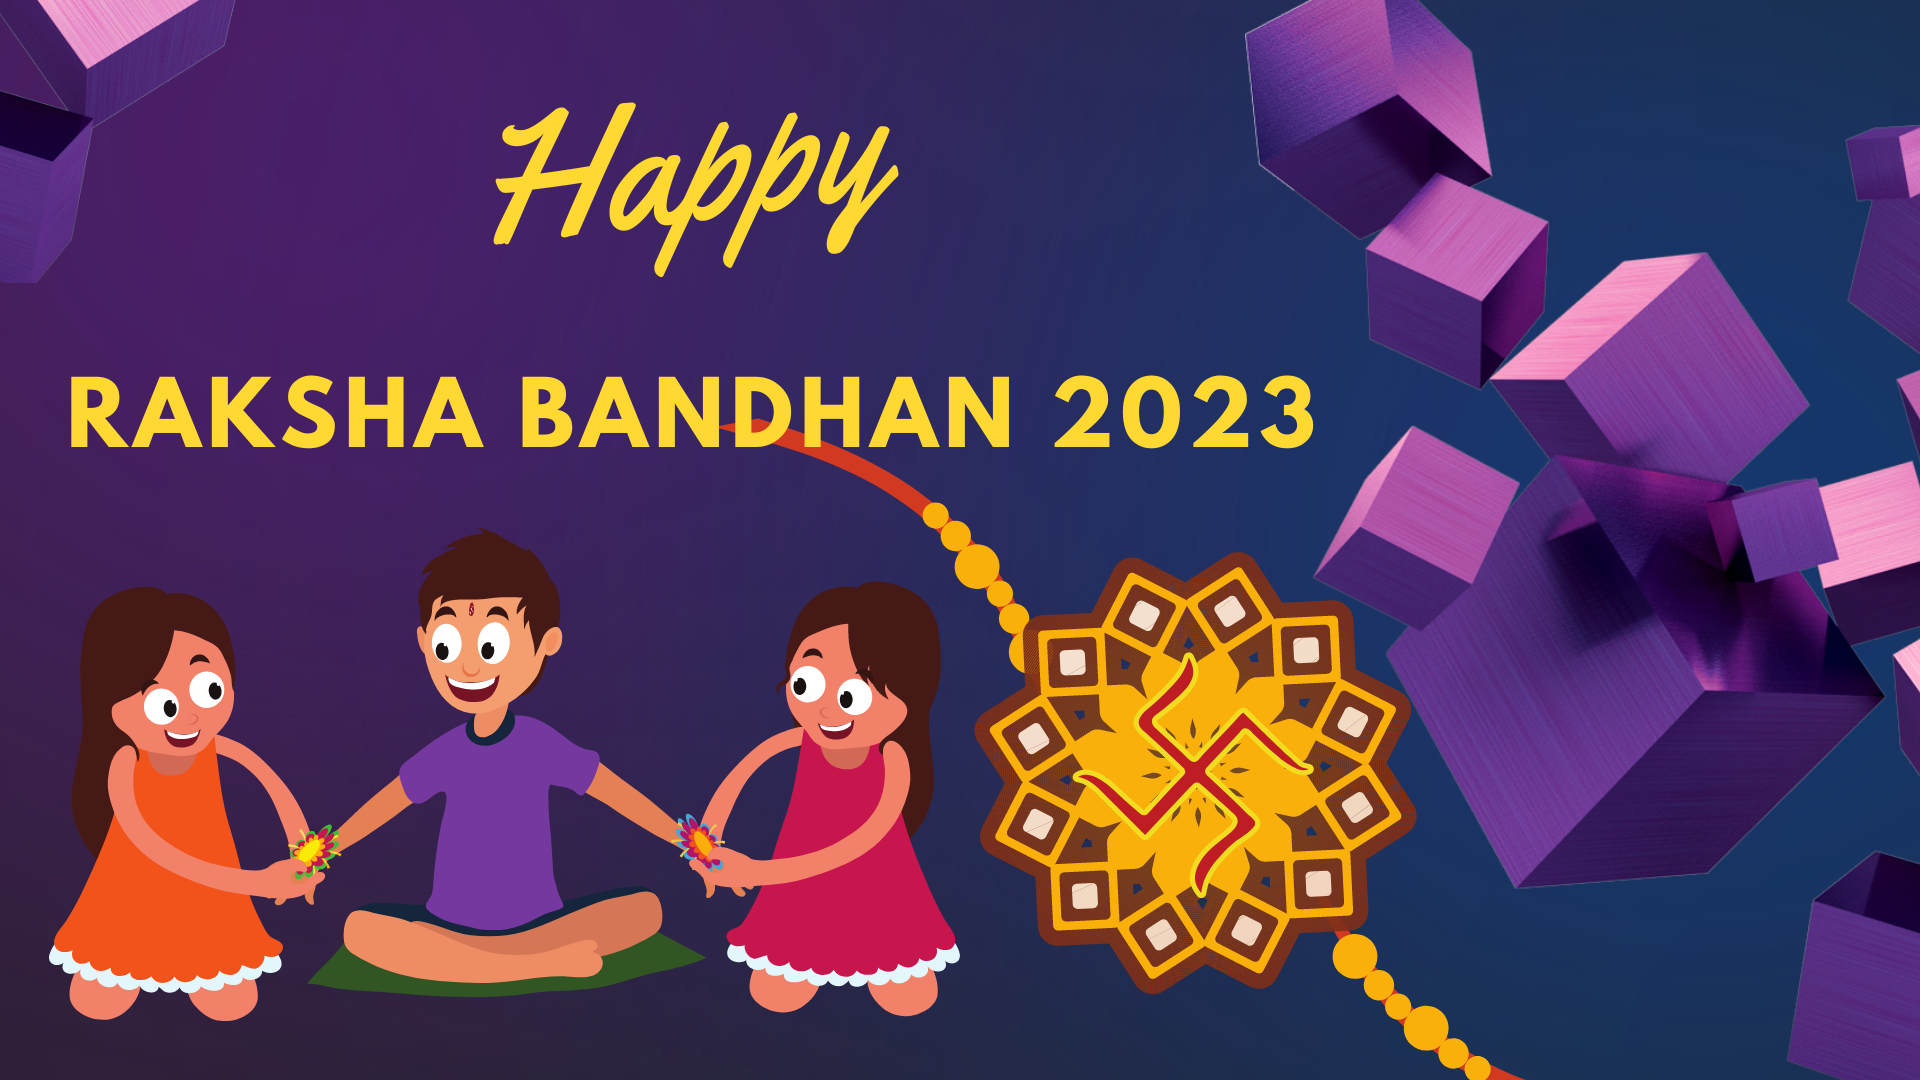 Happy Raksha Bandhan Wishes images and Greetings for Siblings